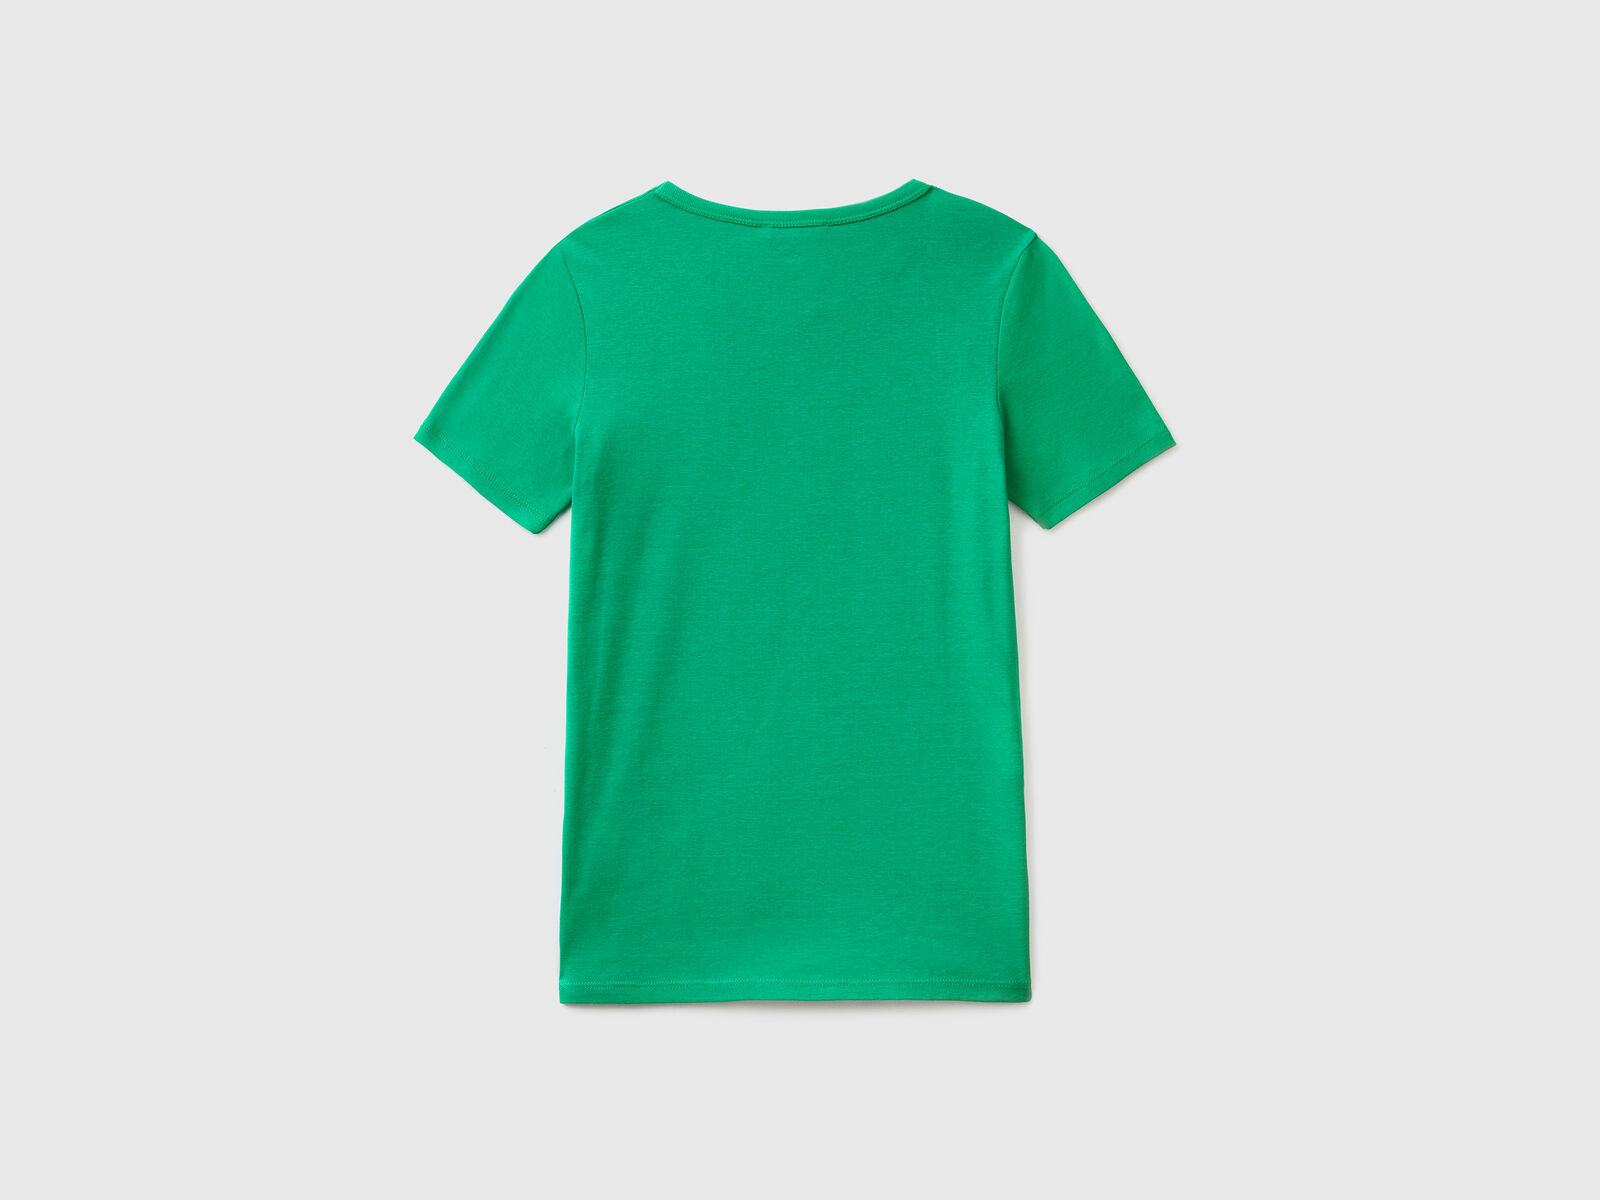 T-shirt in logo with 100% Green Benetton print cotton - glitter |